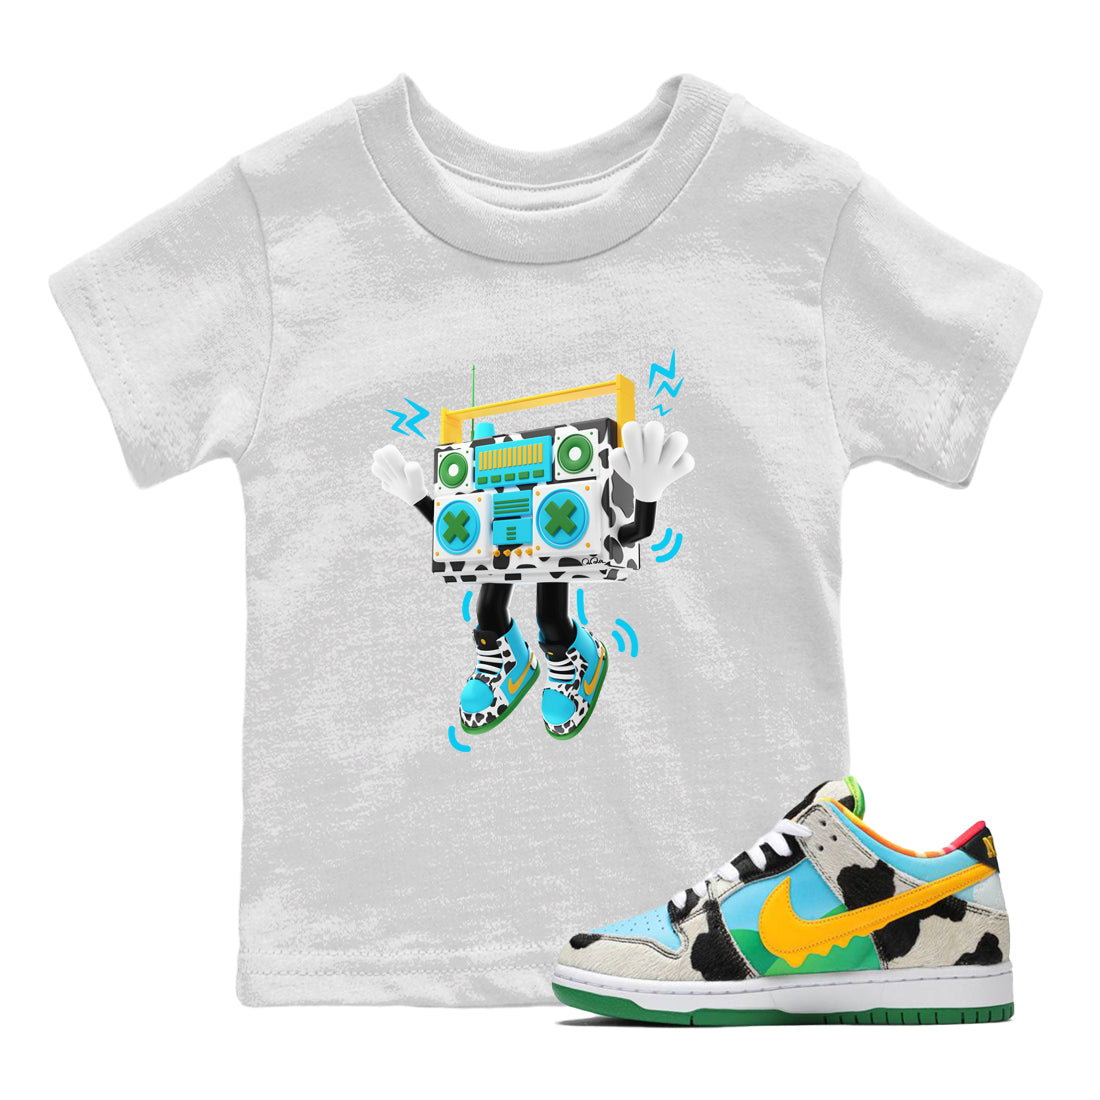 Dunk Chunky Dunky Drip Gear Zone 90s Radio Boy Sneaker Tees Nike SB Ben's Jerrys Sneaker Release Tees Kids Shirts White 1